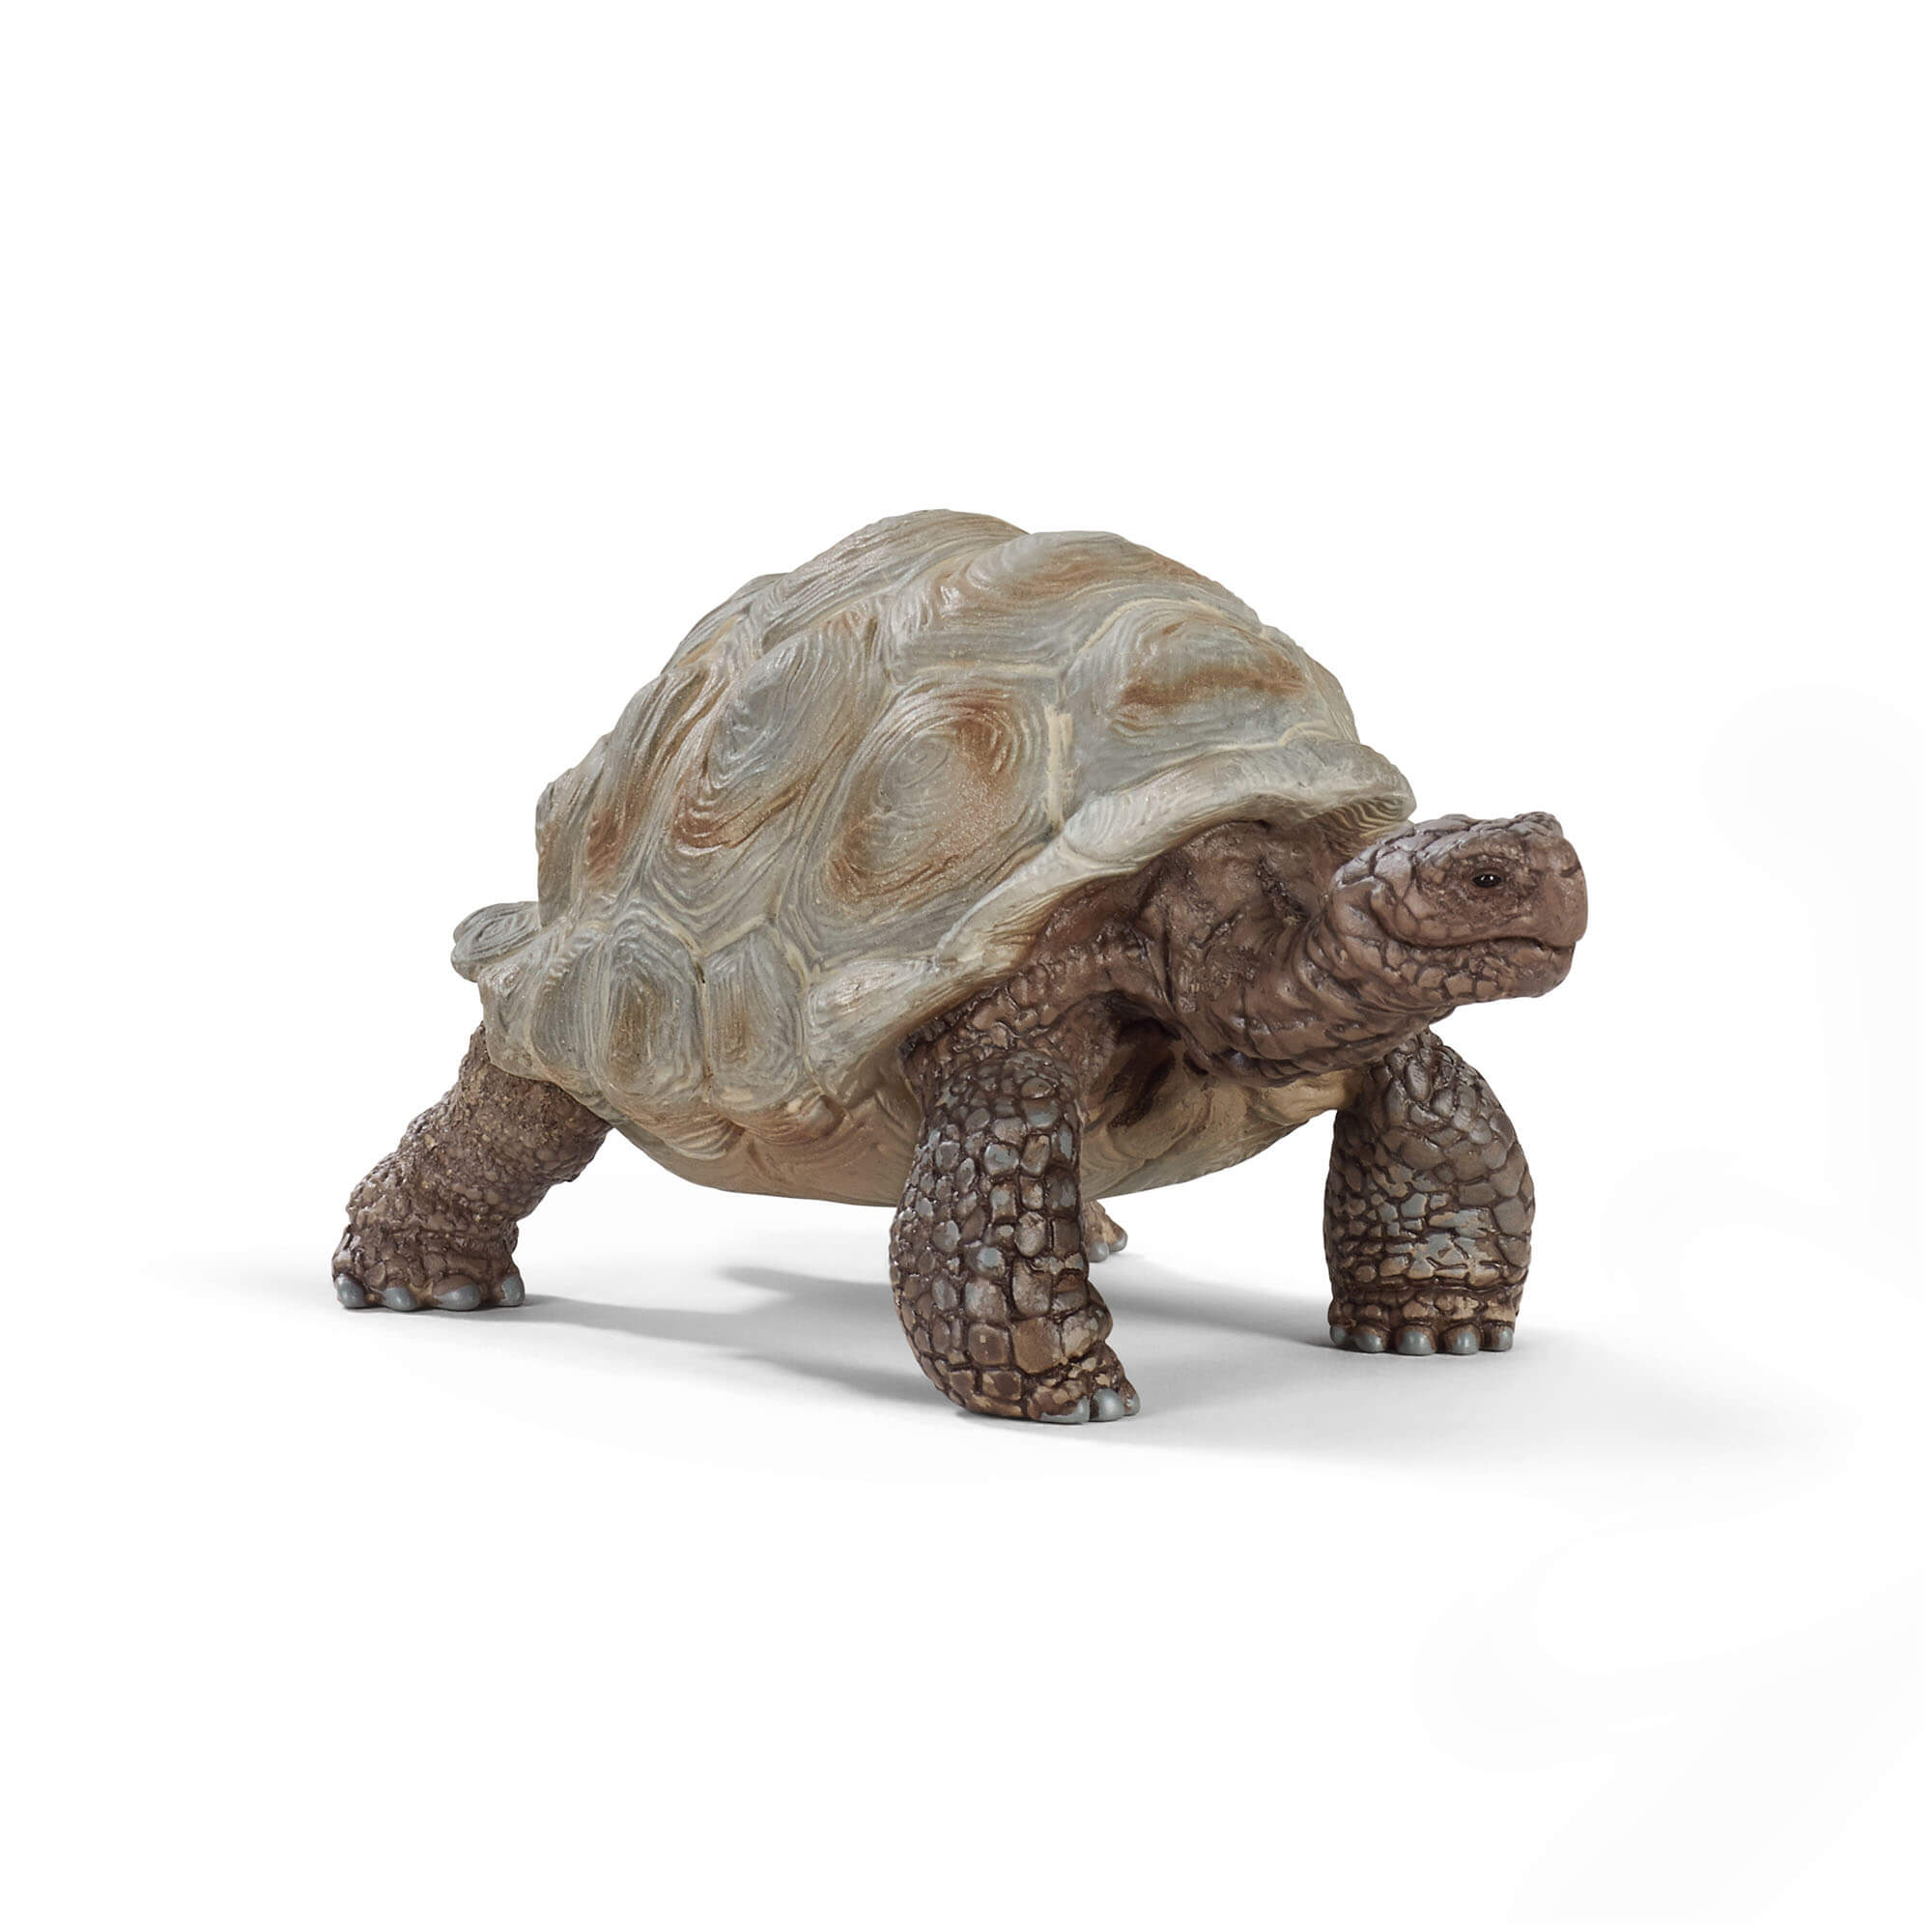 Schleich Wild Life Giant Tortoise Animal Figure